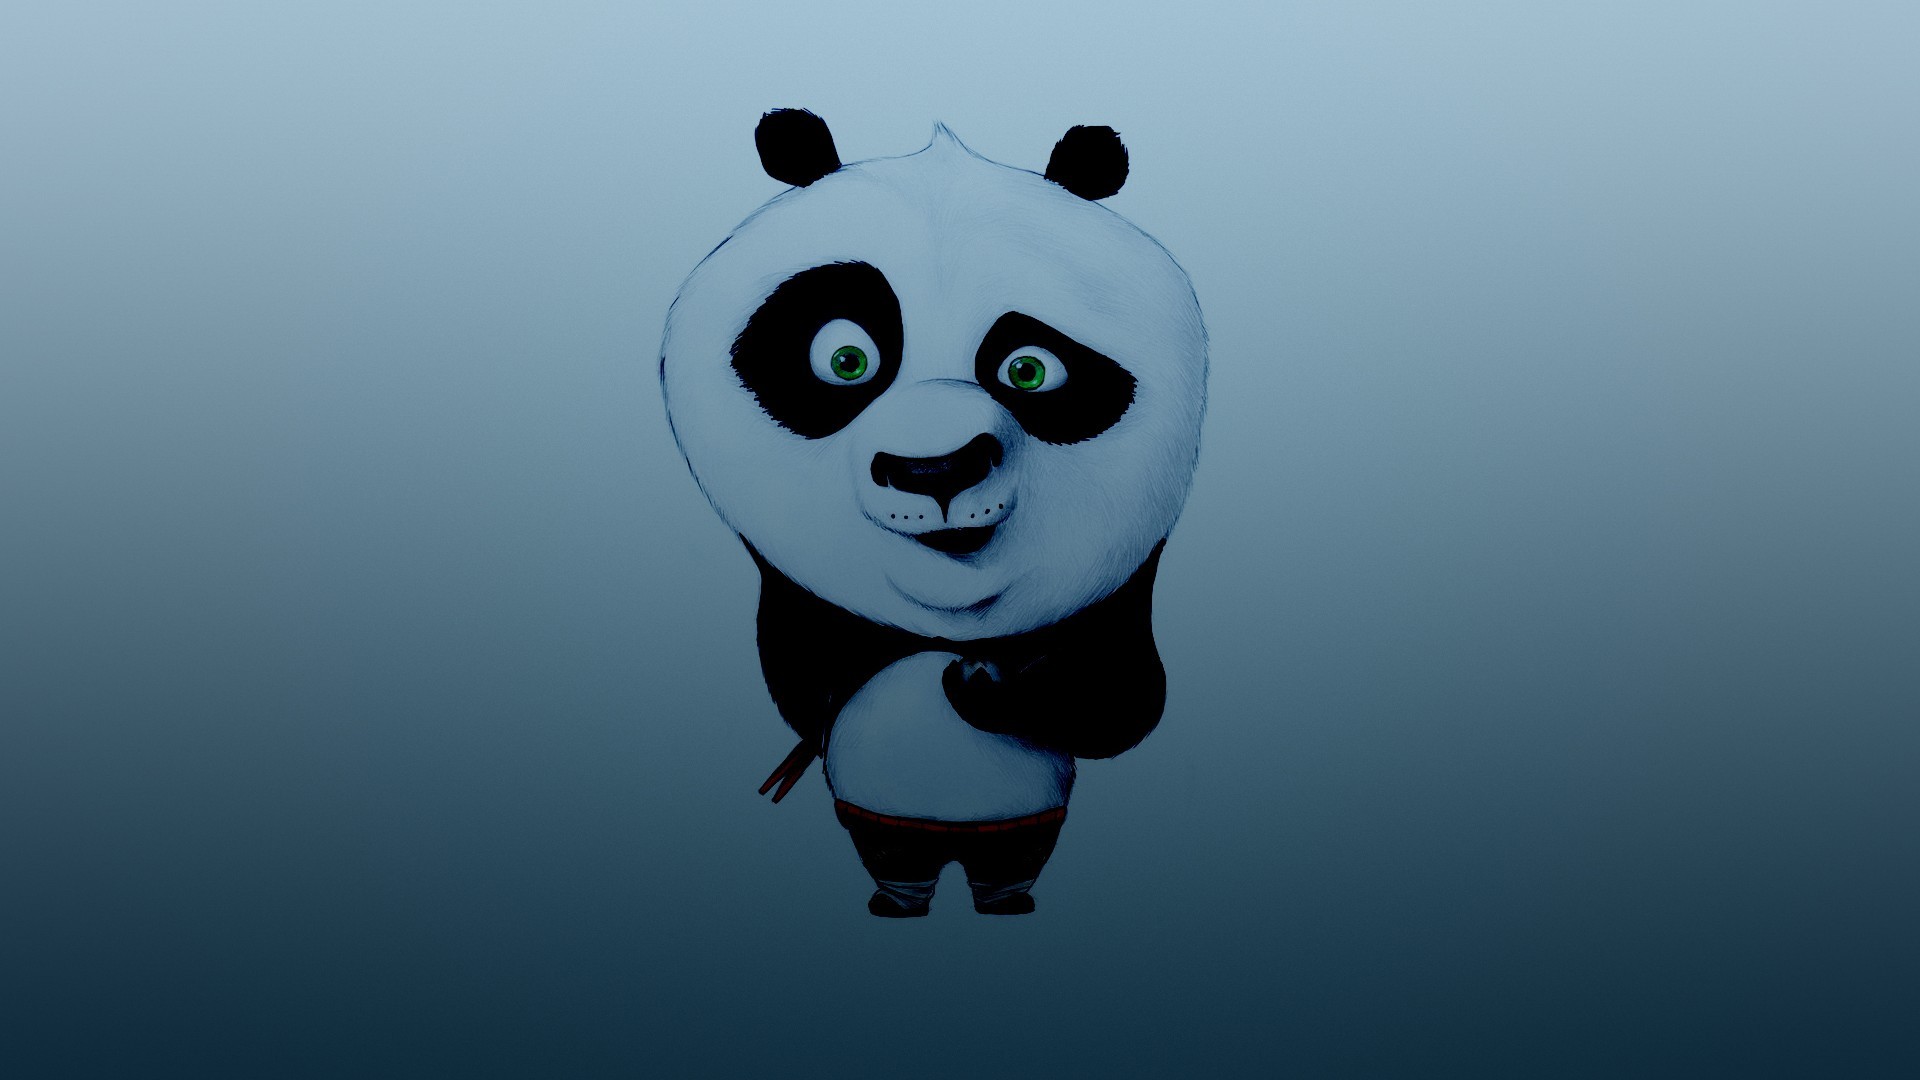 desktop Images cartoon, panda kung fu, background, blue